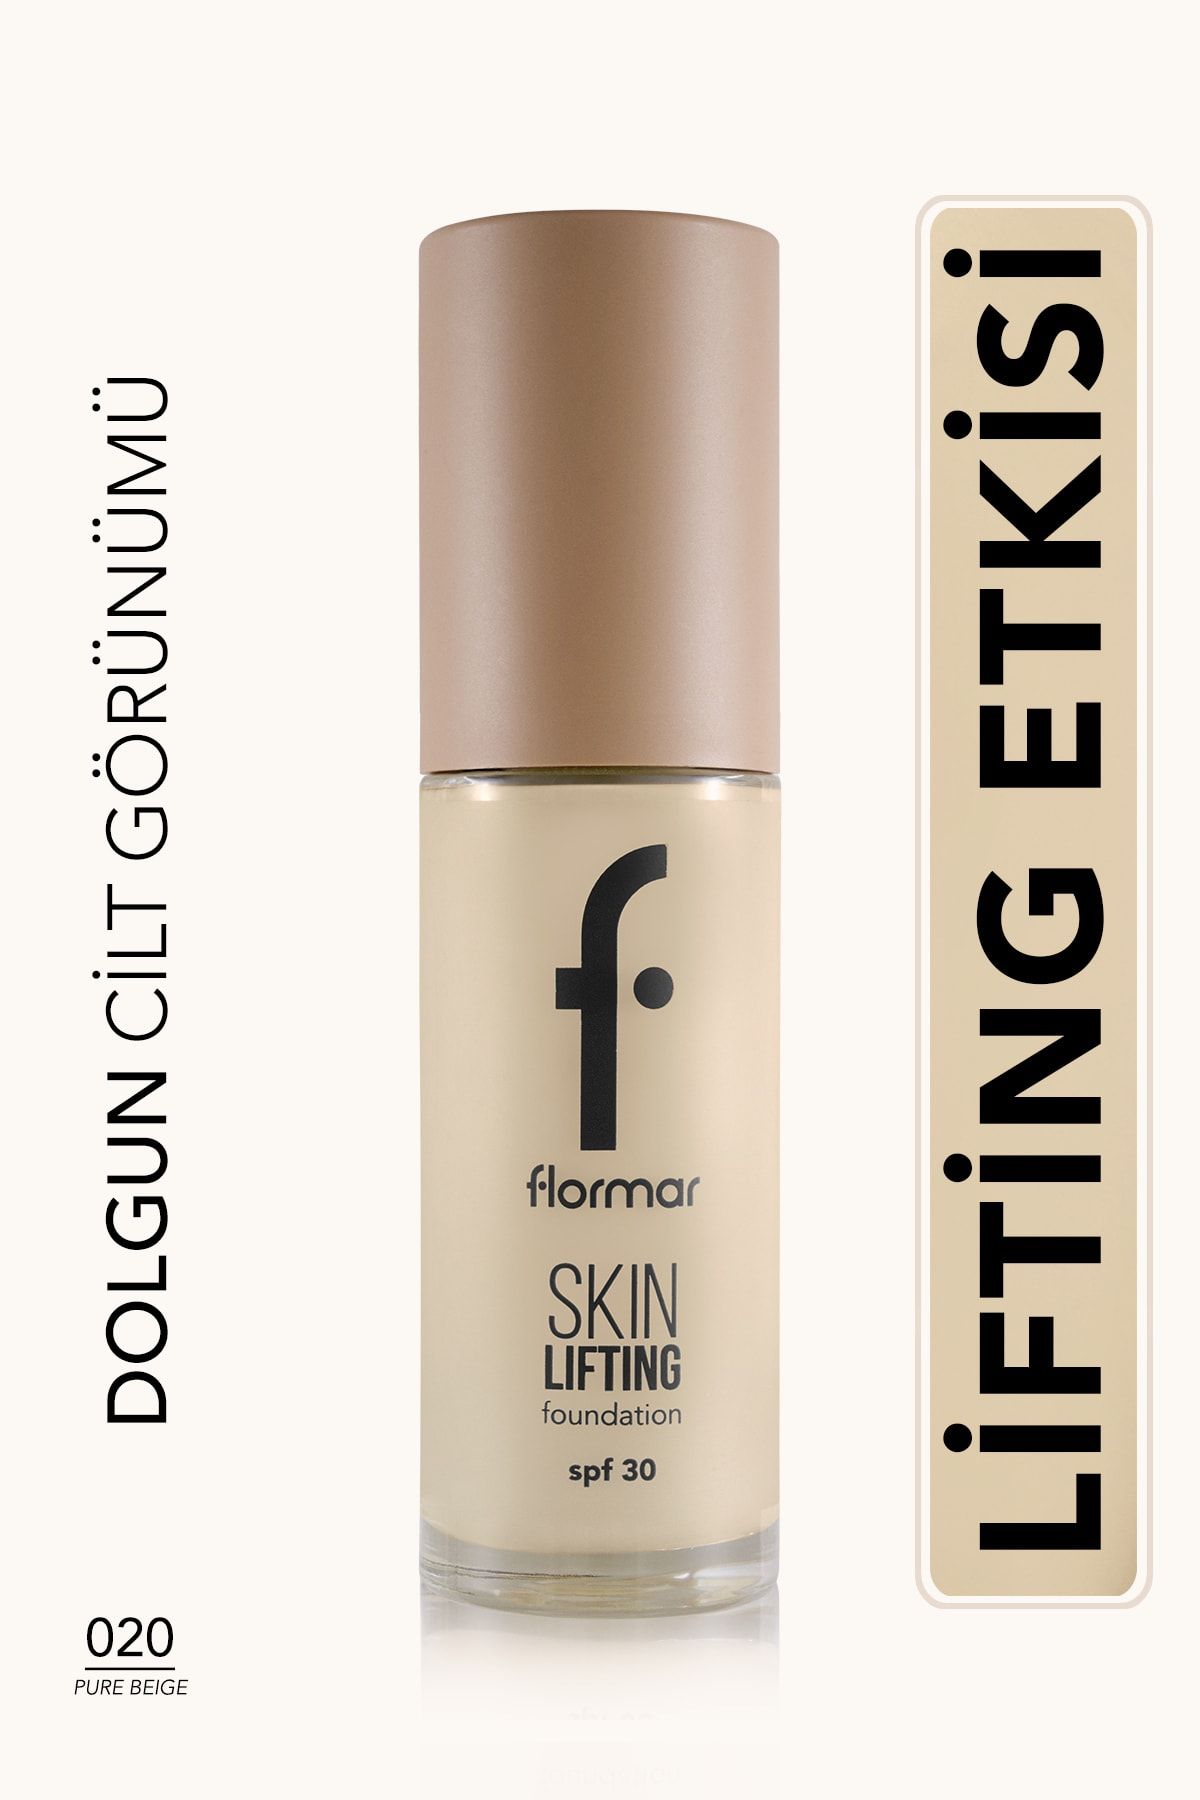 Flormar Spf30 Sıkılaştırıcı Fondöten (SOĞUK ALT TON) - Skin Lifting Fdt. - 020 Pure Beige - 8682536059558